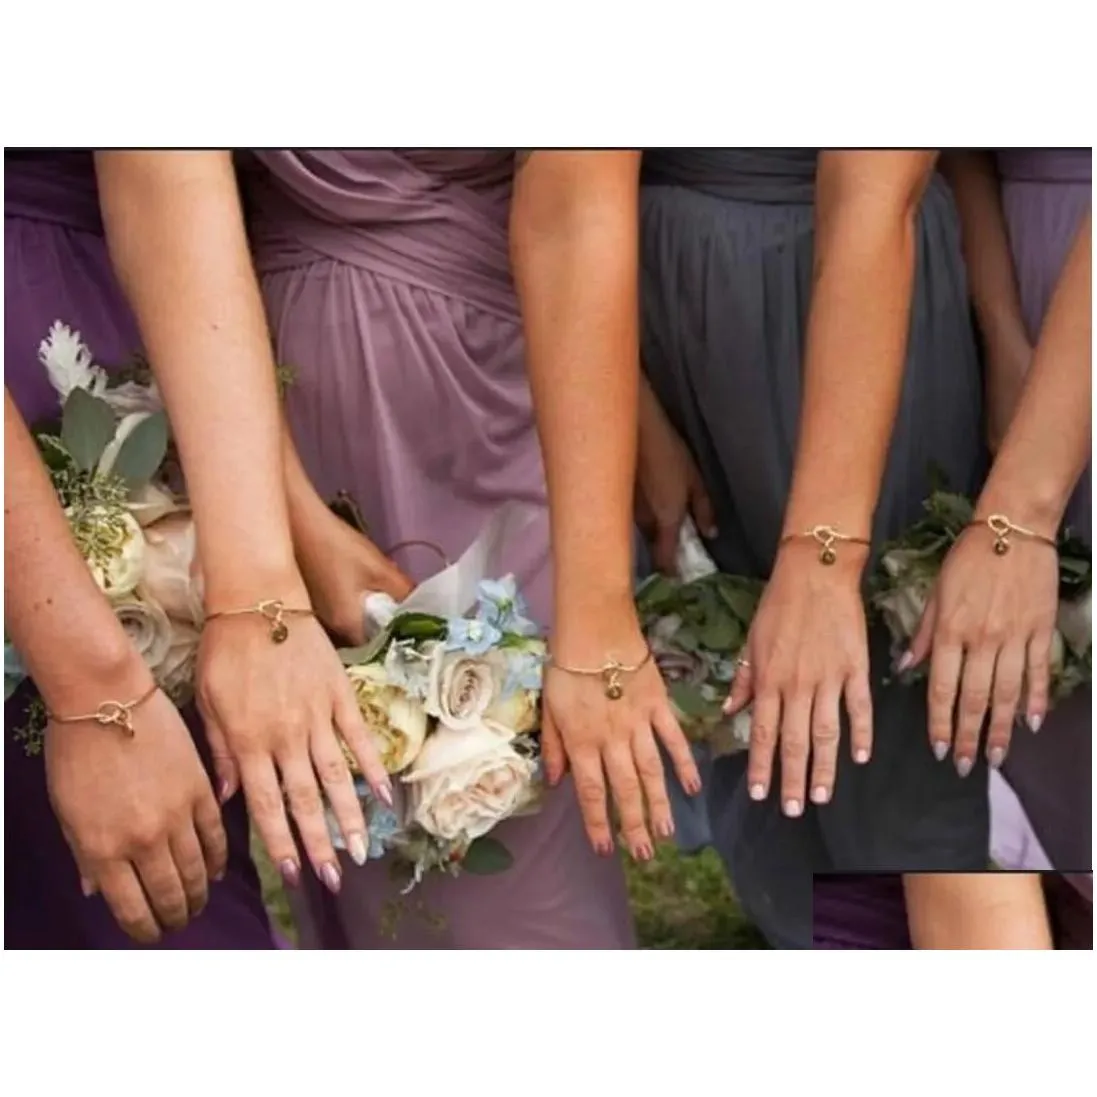 26 Initial Letter Knot Heart Bracelet Bangle Girl Fashion Jewelry Alloy Round Pendant Bracelets for Women Girls Bridesmaid gift